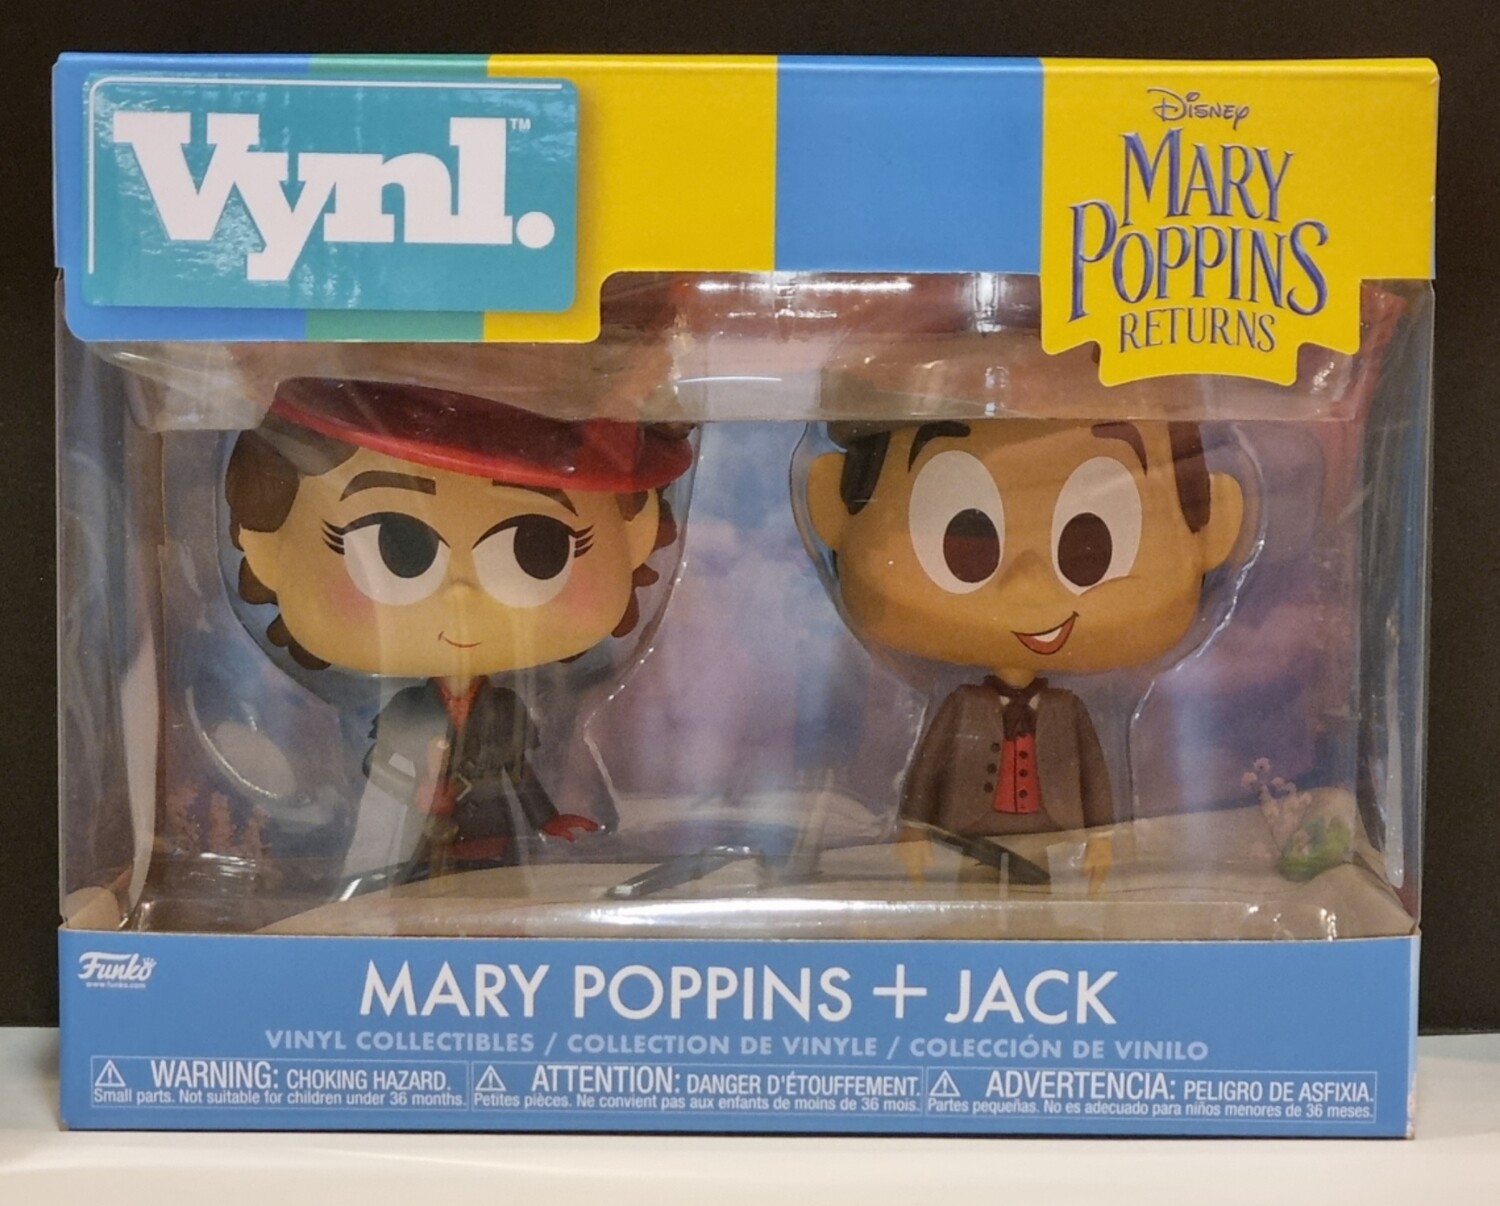 Funko Vynl, Mary Poppins + Jack, Disney, Mary Poppins returns